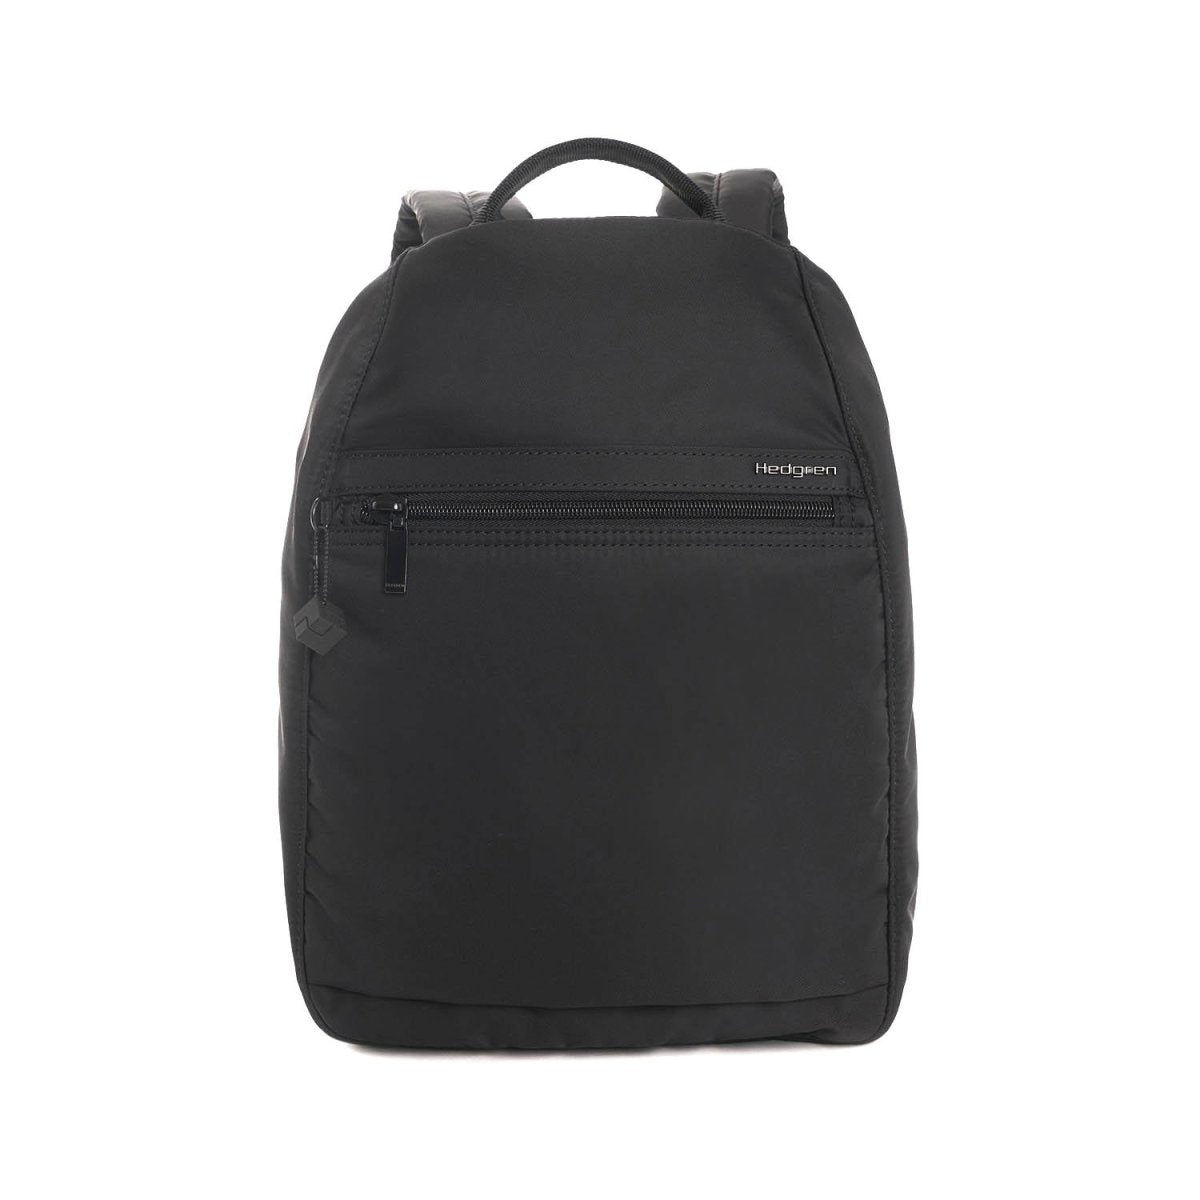 Vogue Black RFID Backpack - Minimax